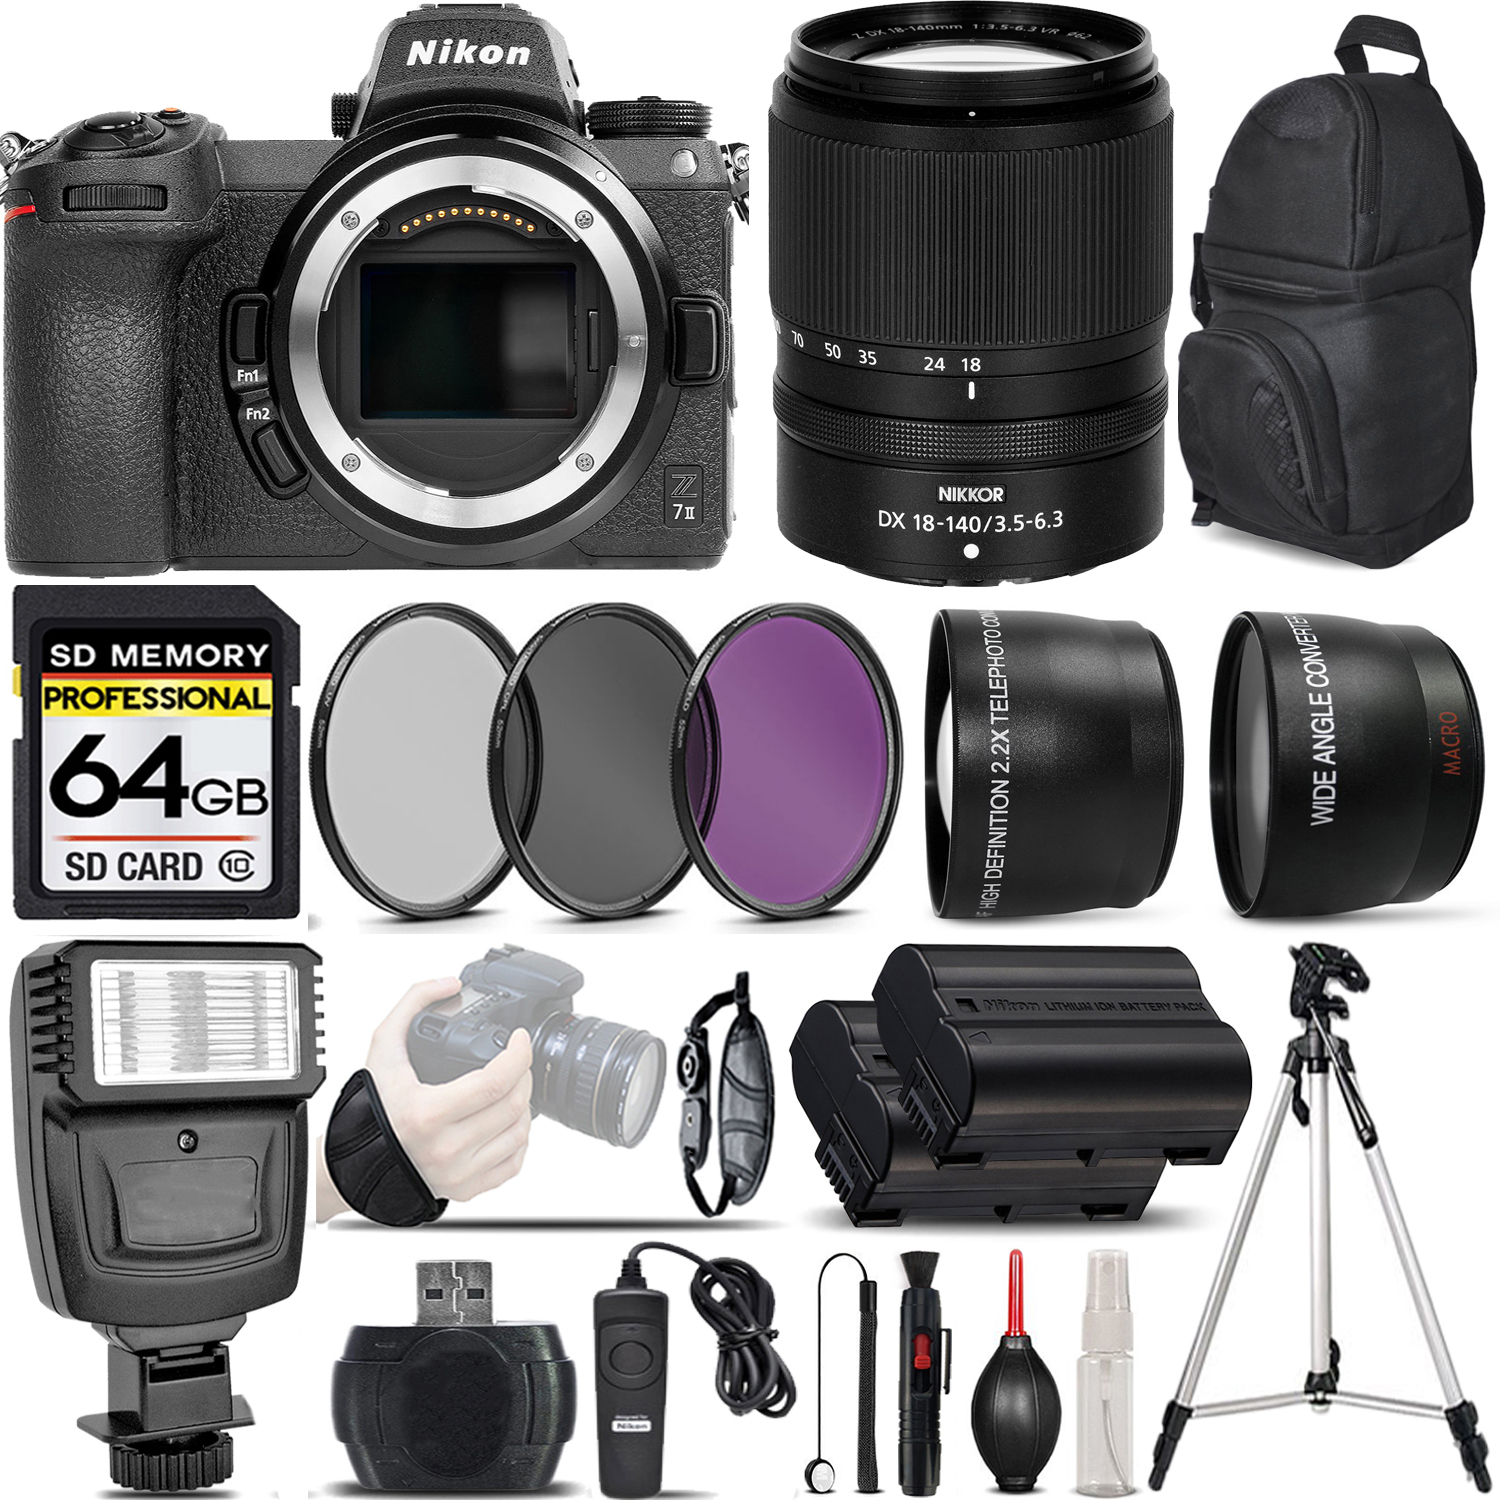 Z7 II Digital Camera + 18-140mm VR Lens + 3 Piece Filter Set + 64GB Savings Bundle *FREE SHIPPING*